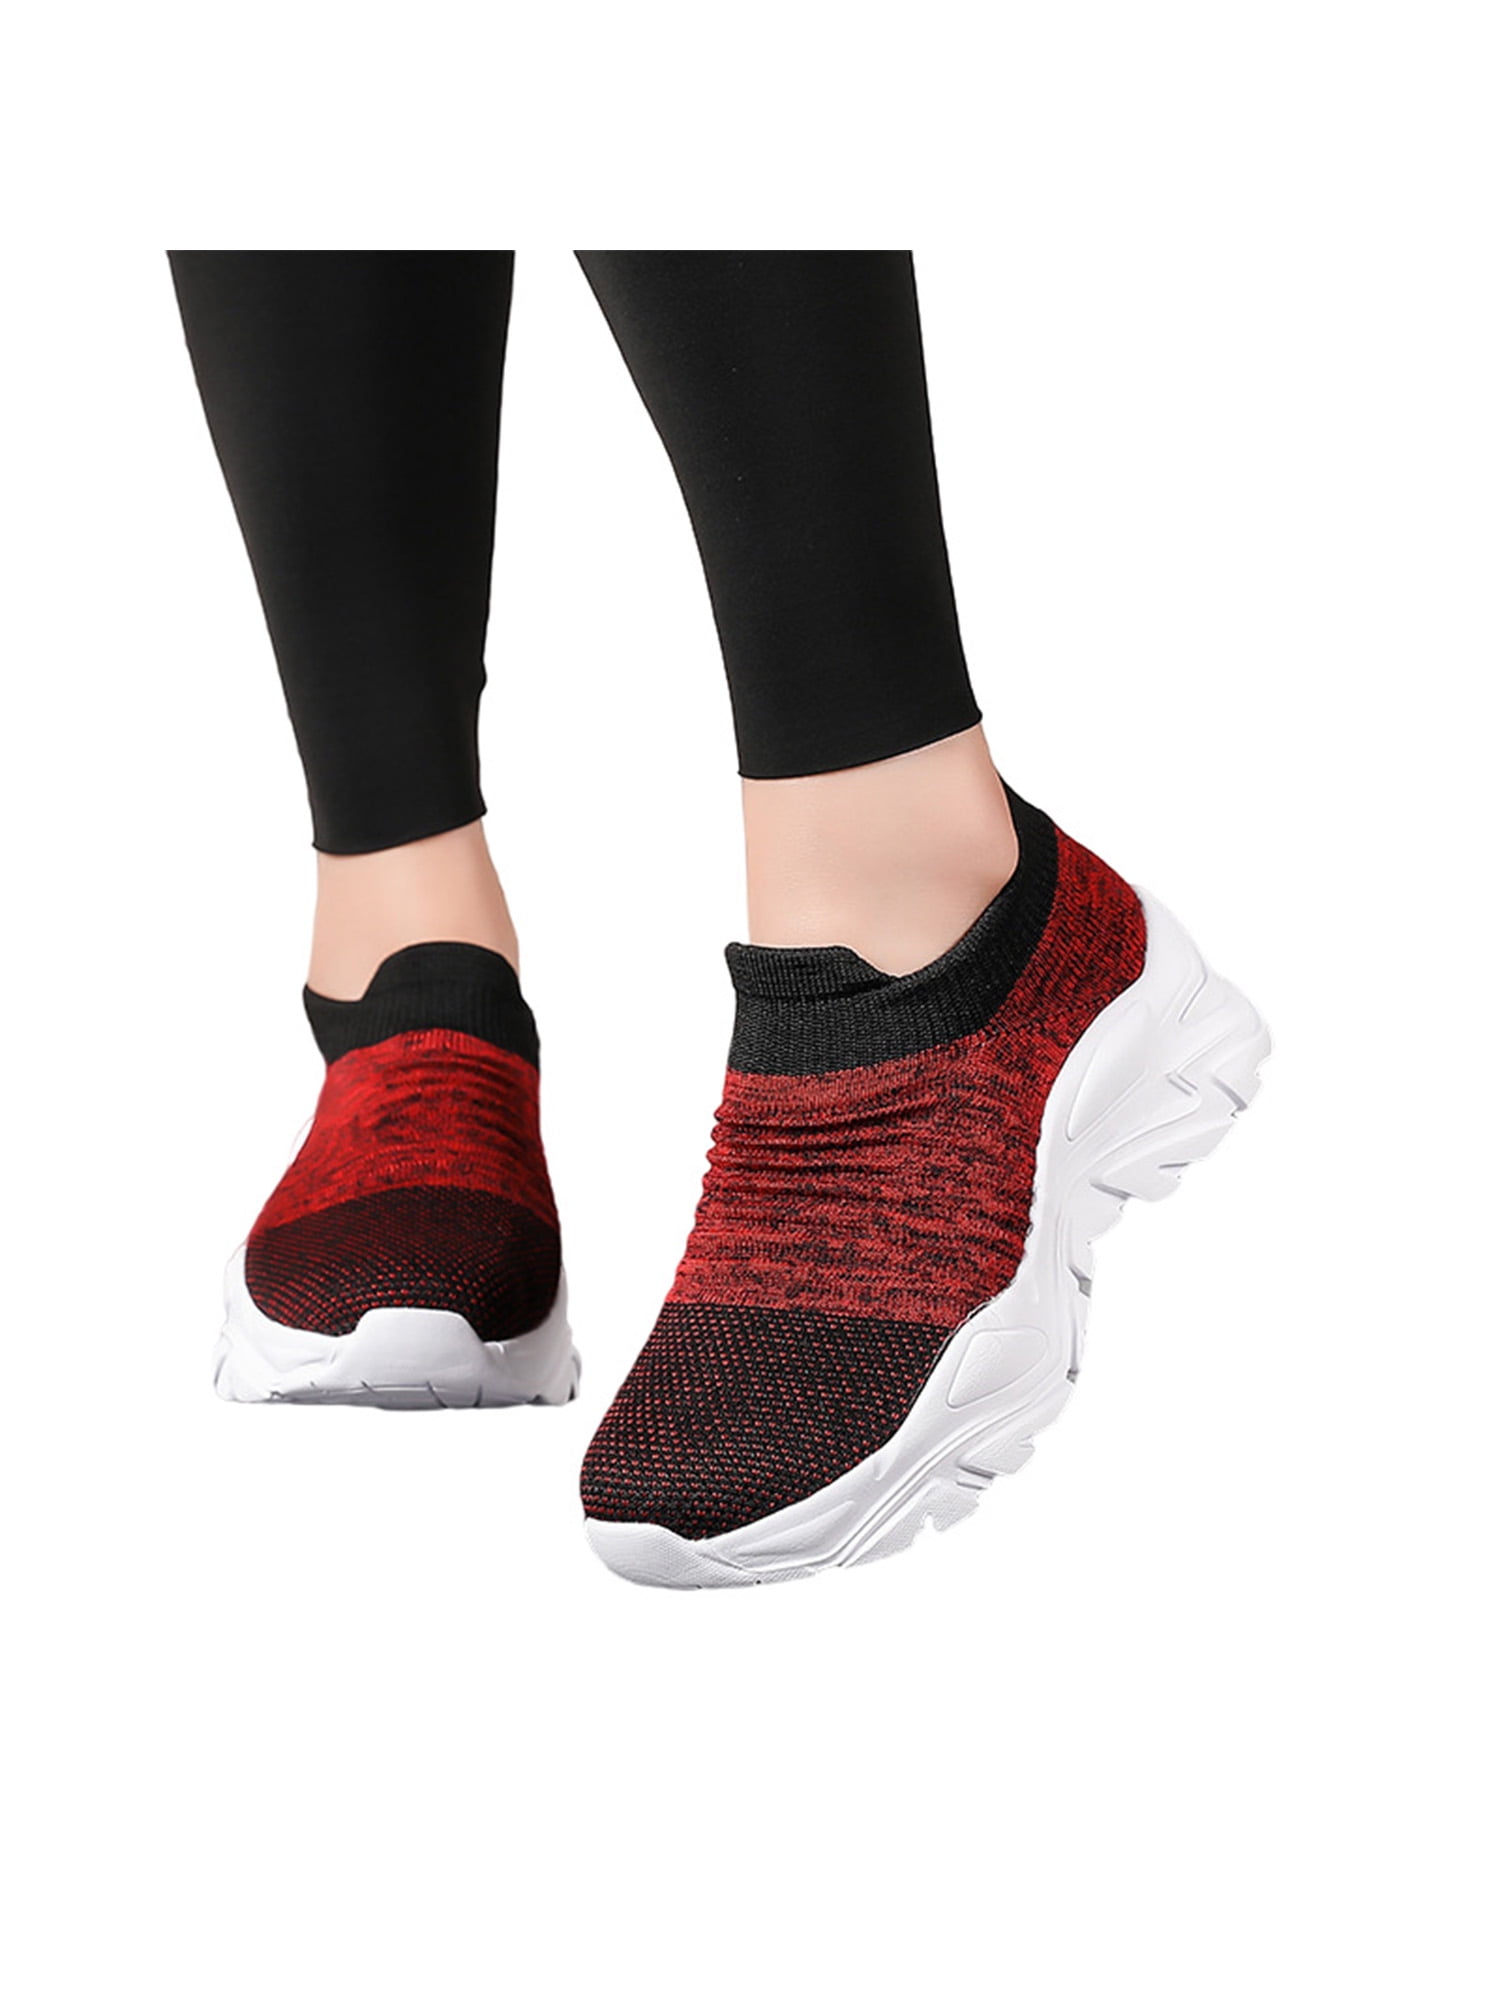 Unisex Womens Comfort Knit Sock Shoes Breath Mesh Tennis Sneakers Casual Walking 